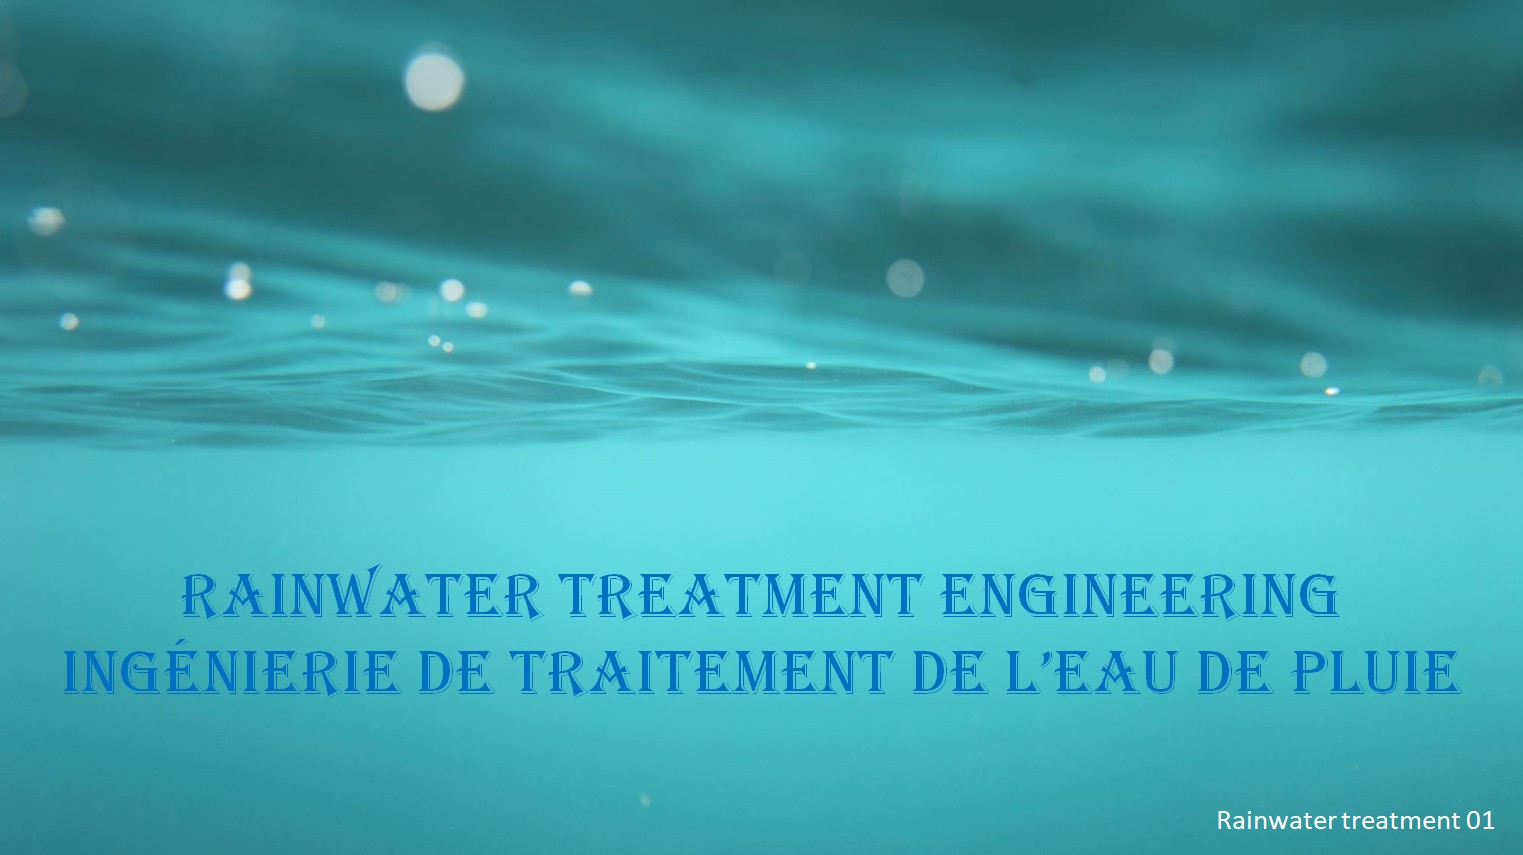 Rainwater treatment 01